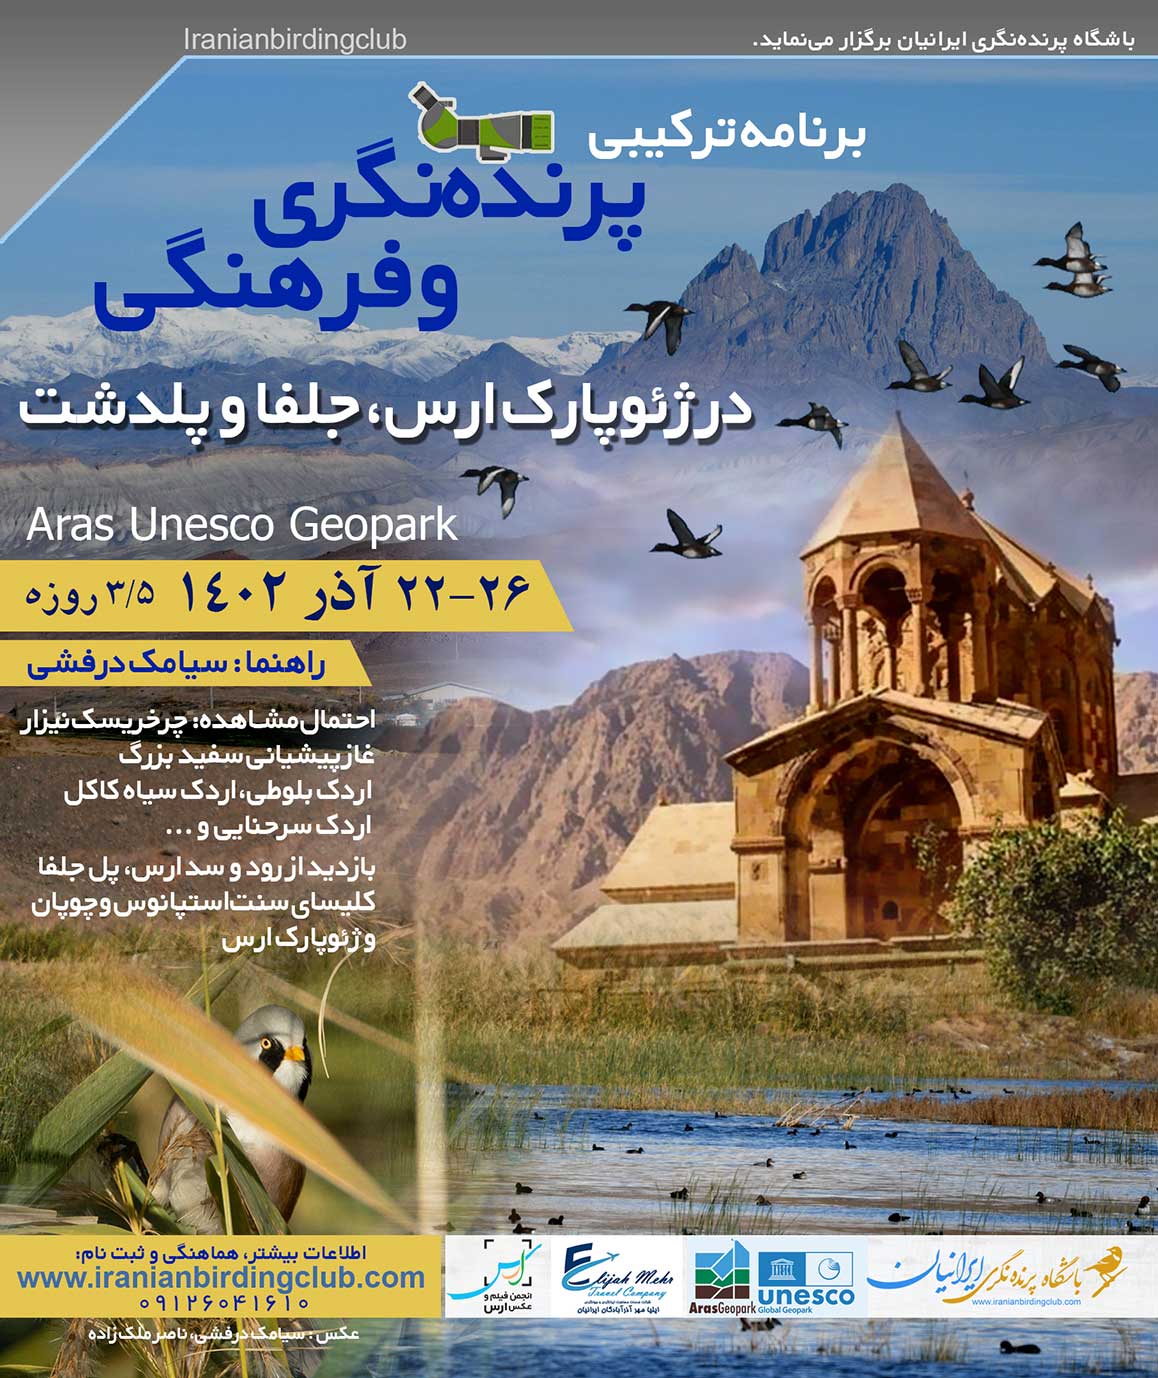 Aras Julfa geopark birdwatchig tour_Iranian birding tour